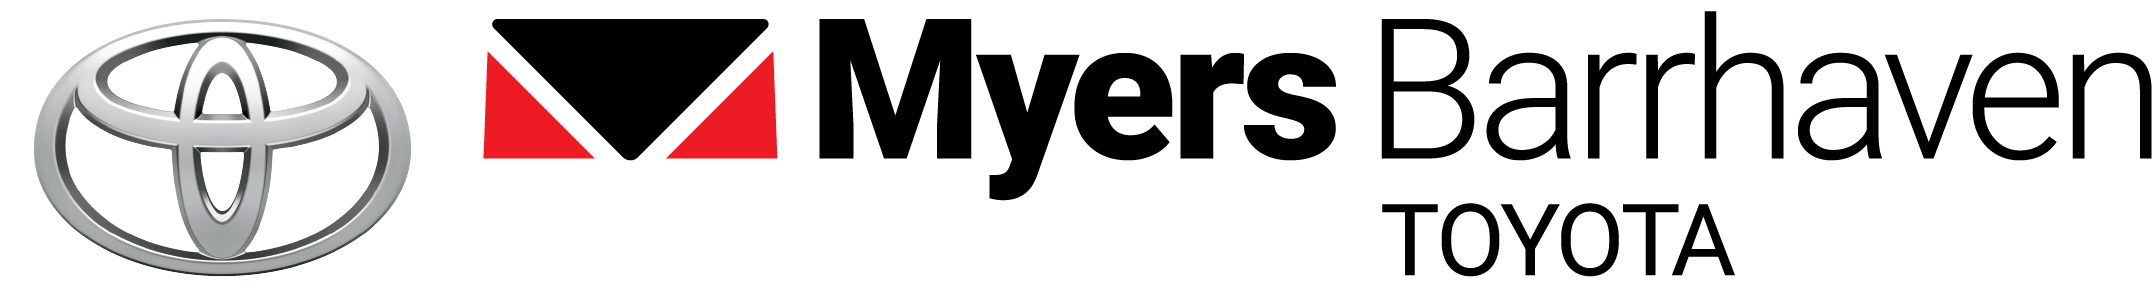 Myers Barrhaven Toyota